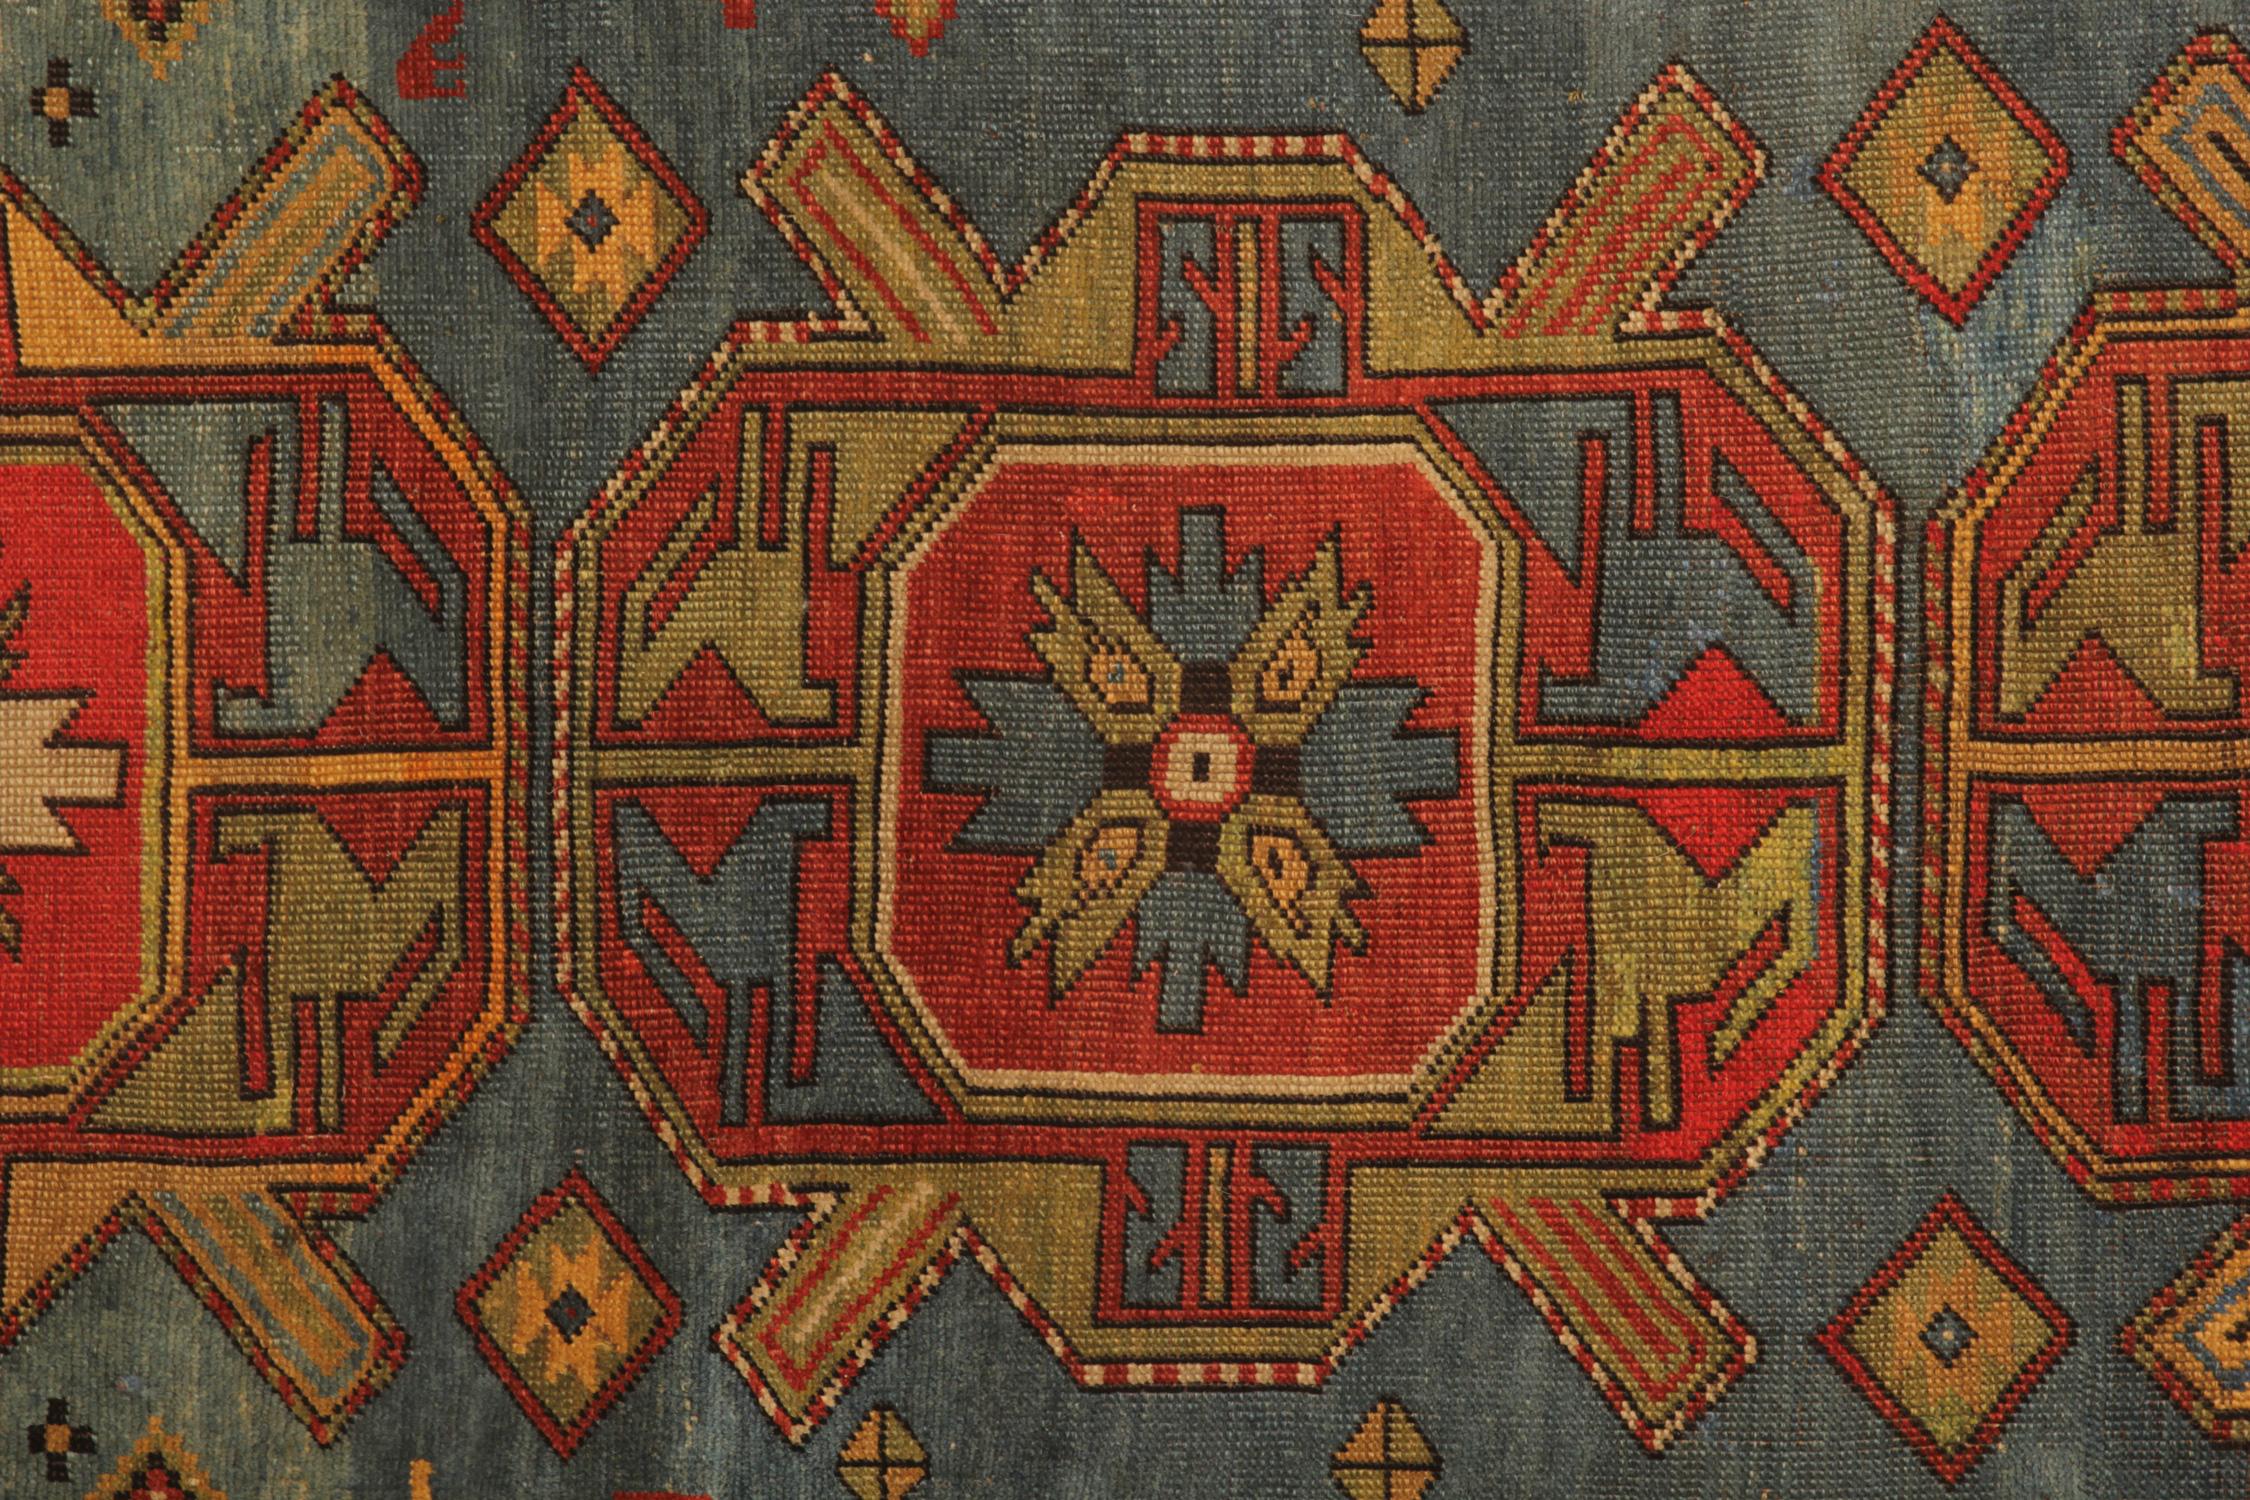 Hand-Crafted Rare Handmade 19th Century Caucasian Kazak Area Rug Carpet